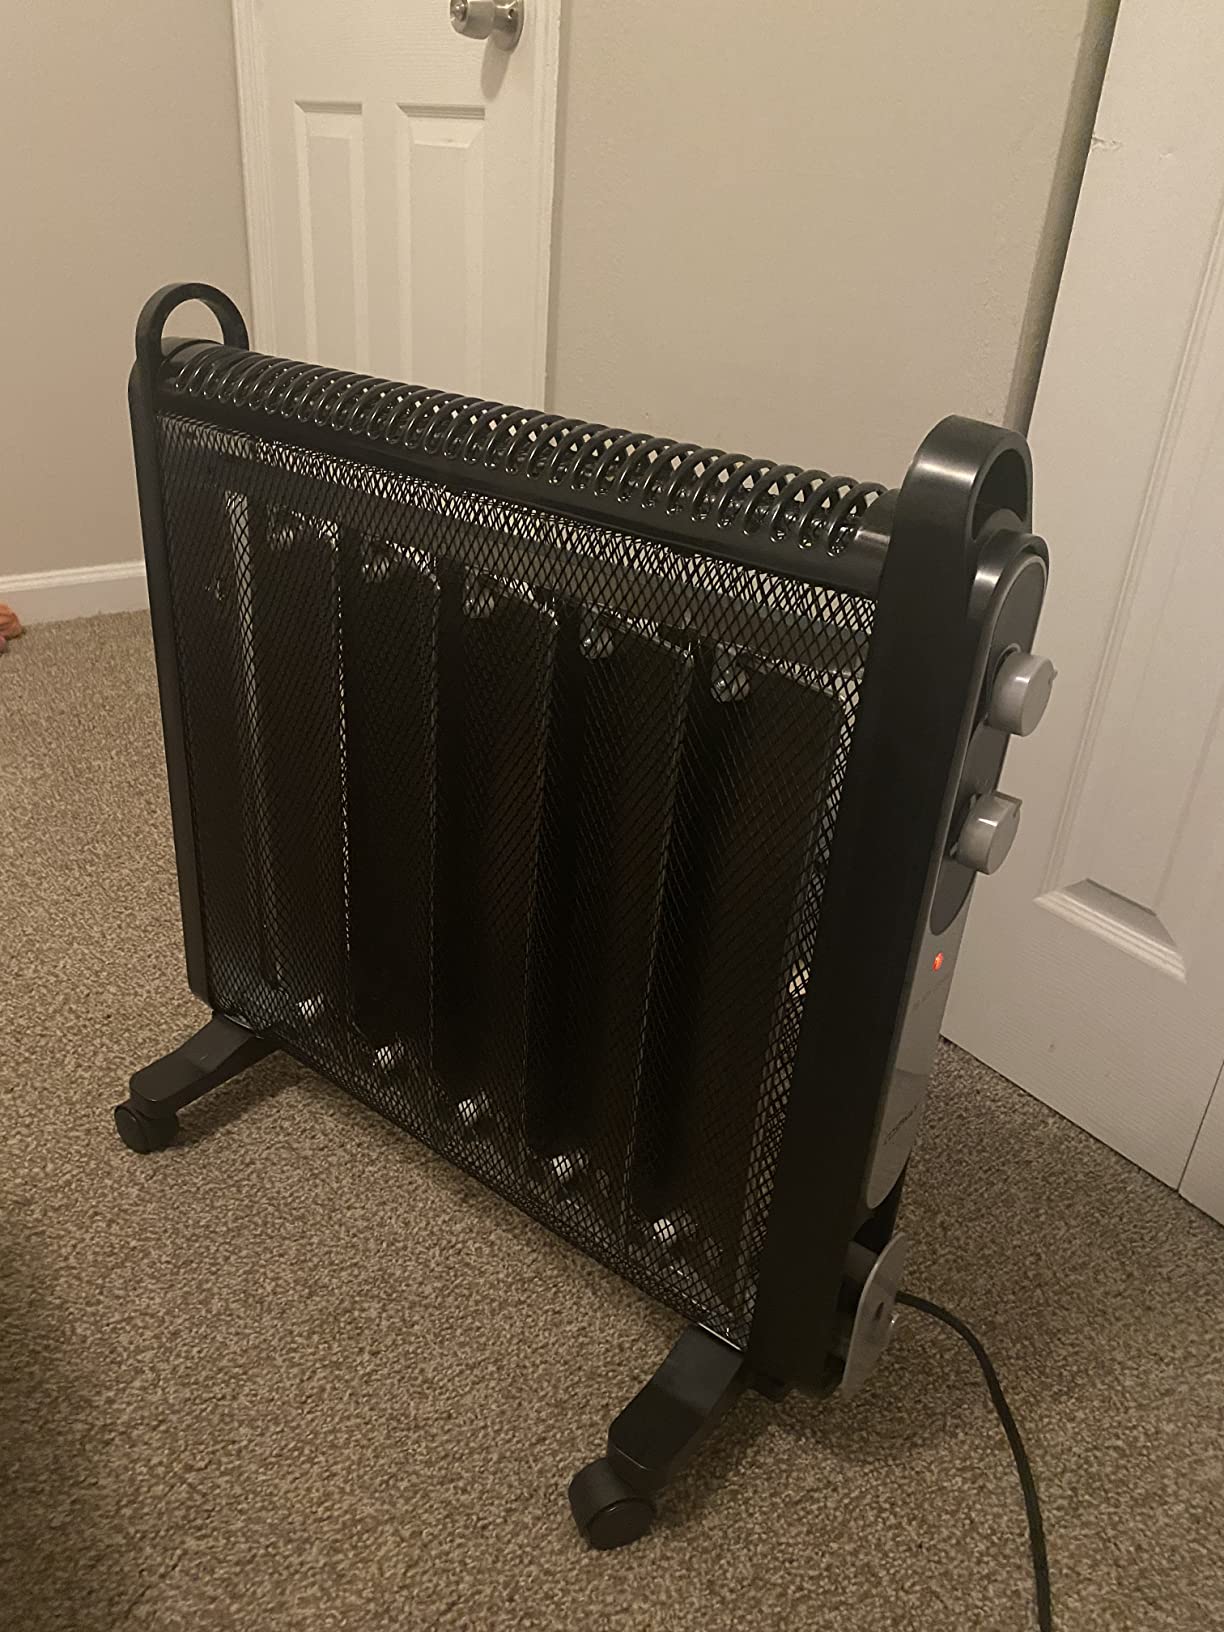 Heater for winter